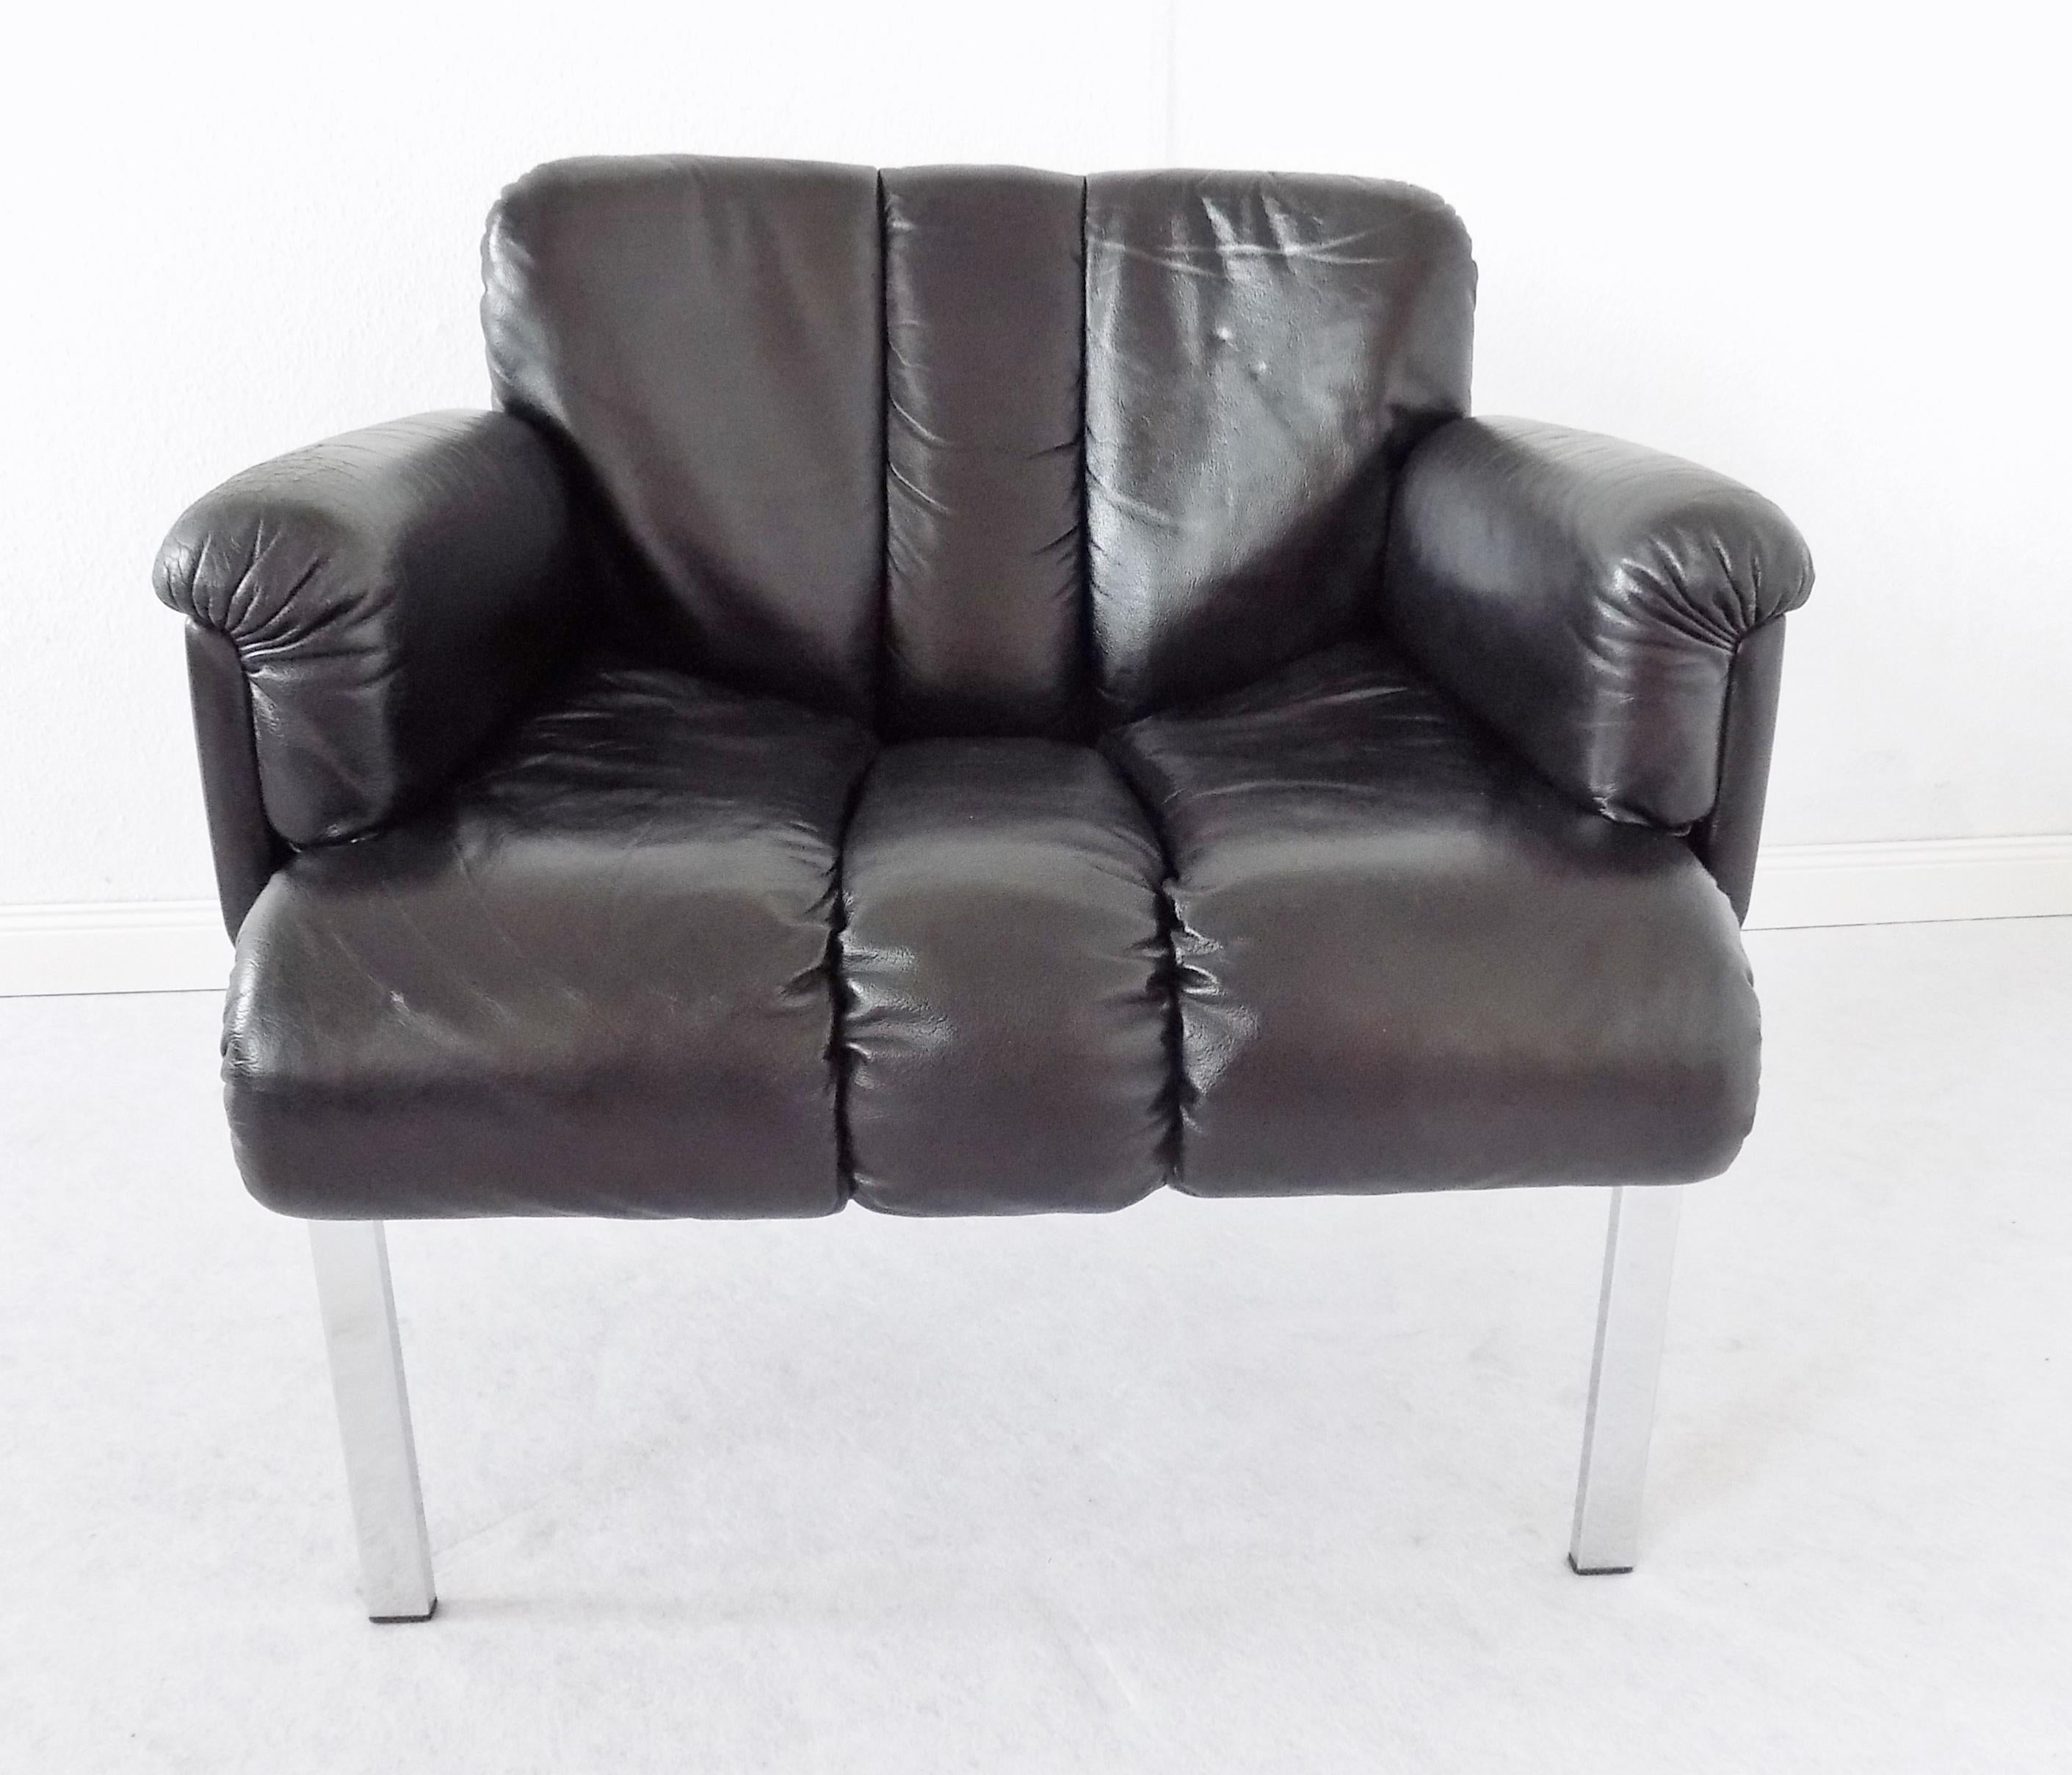 Girsberger Eurochair Black Leather Lounge Chair, Swiss made, Mid-Century modern For Sale 3